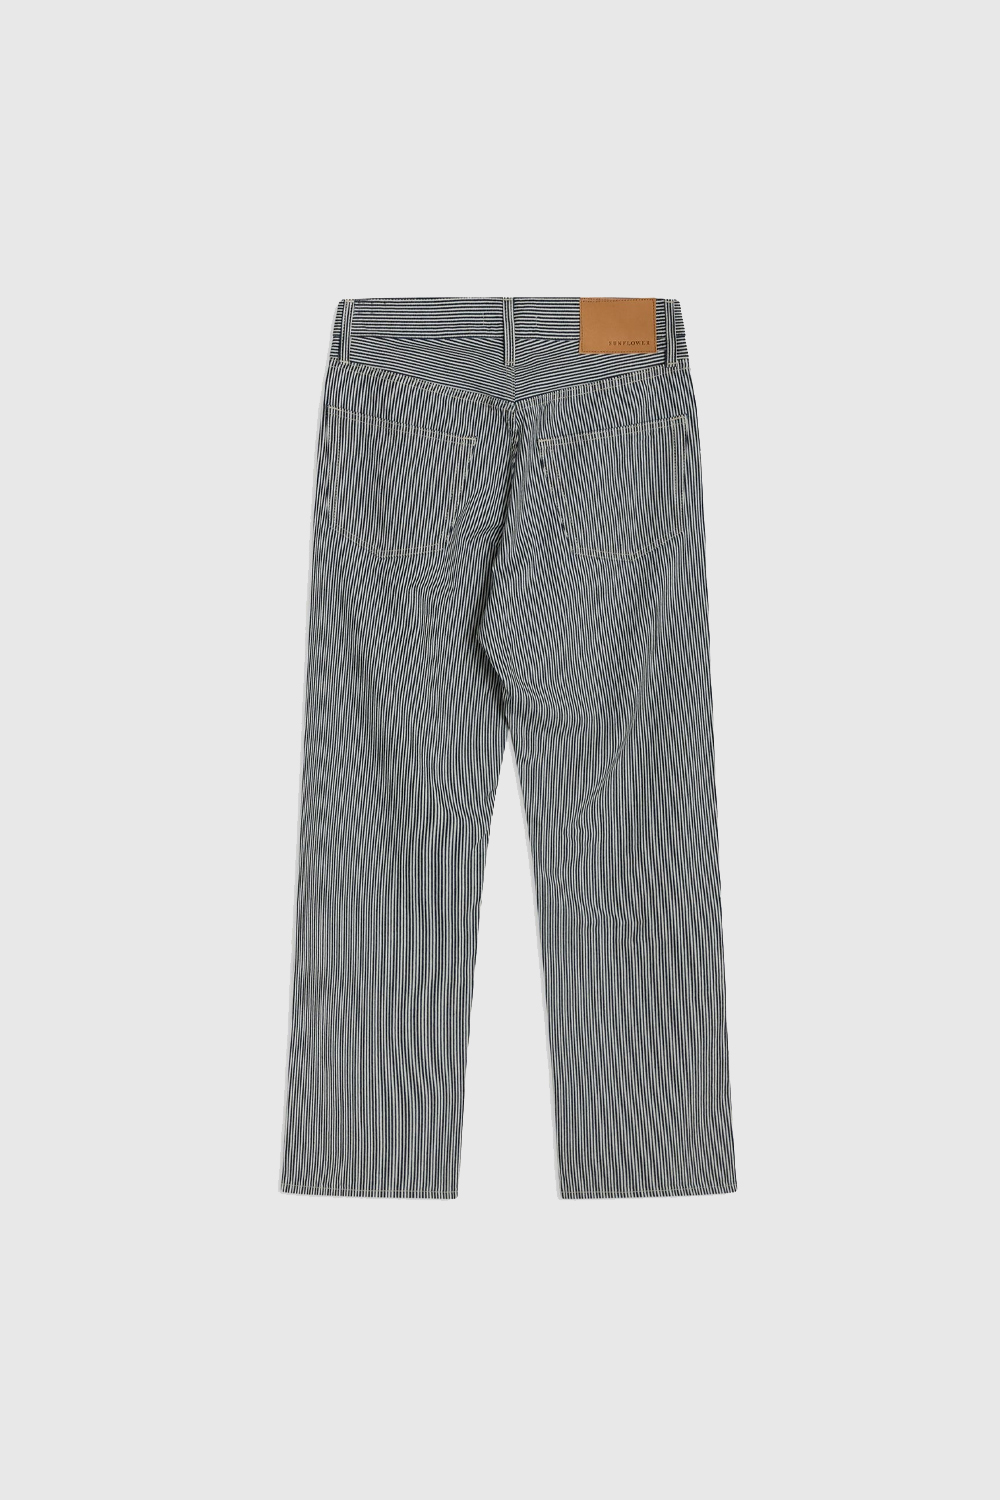 Sunflower Loose 5-Pocket Pants Hickory Stripe at